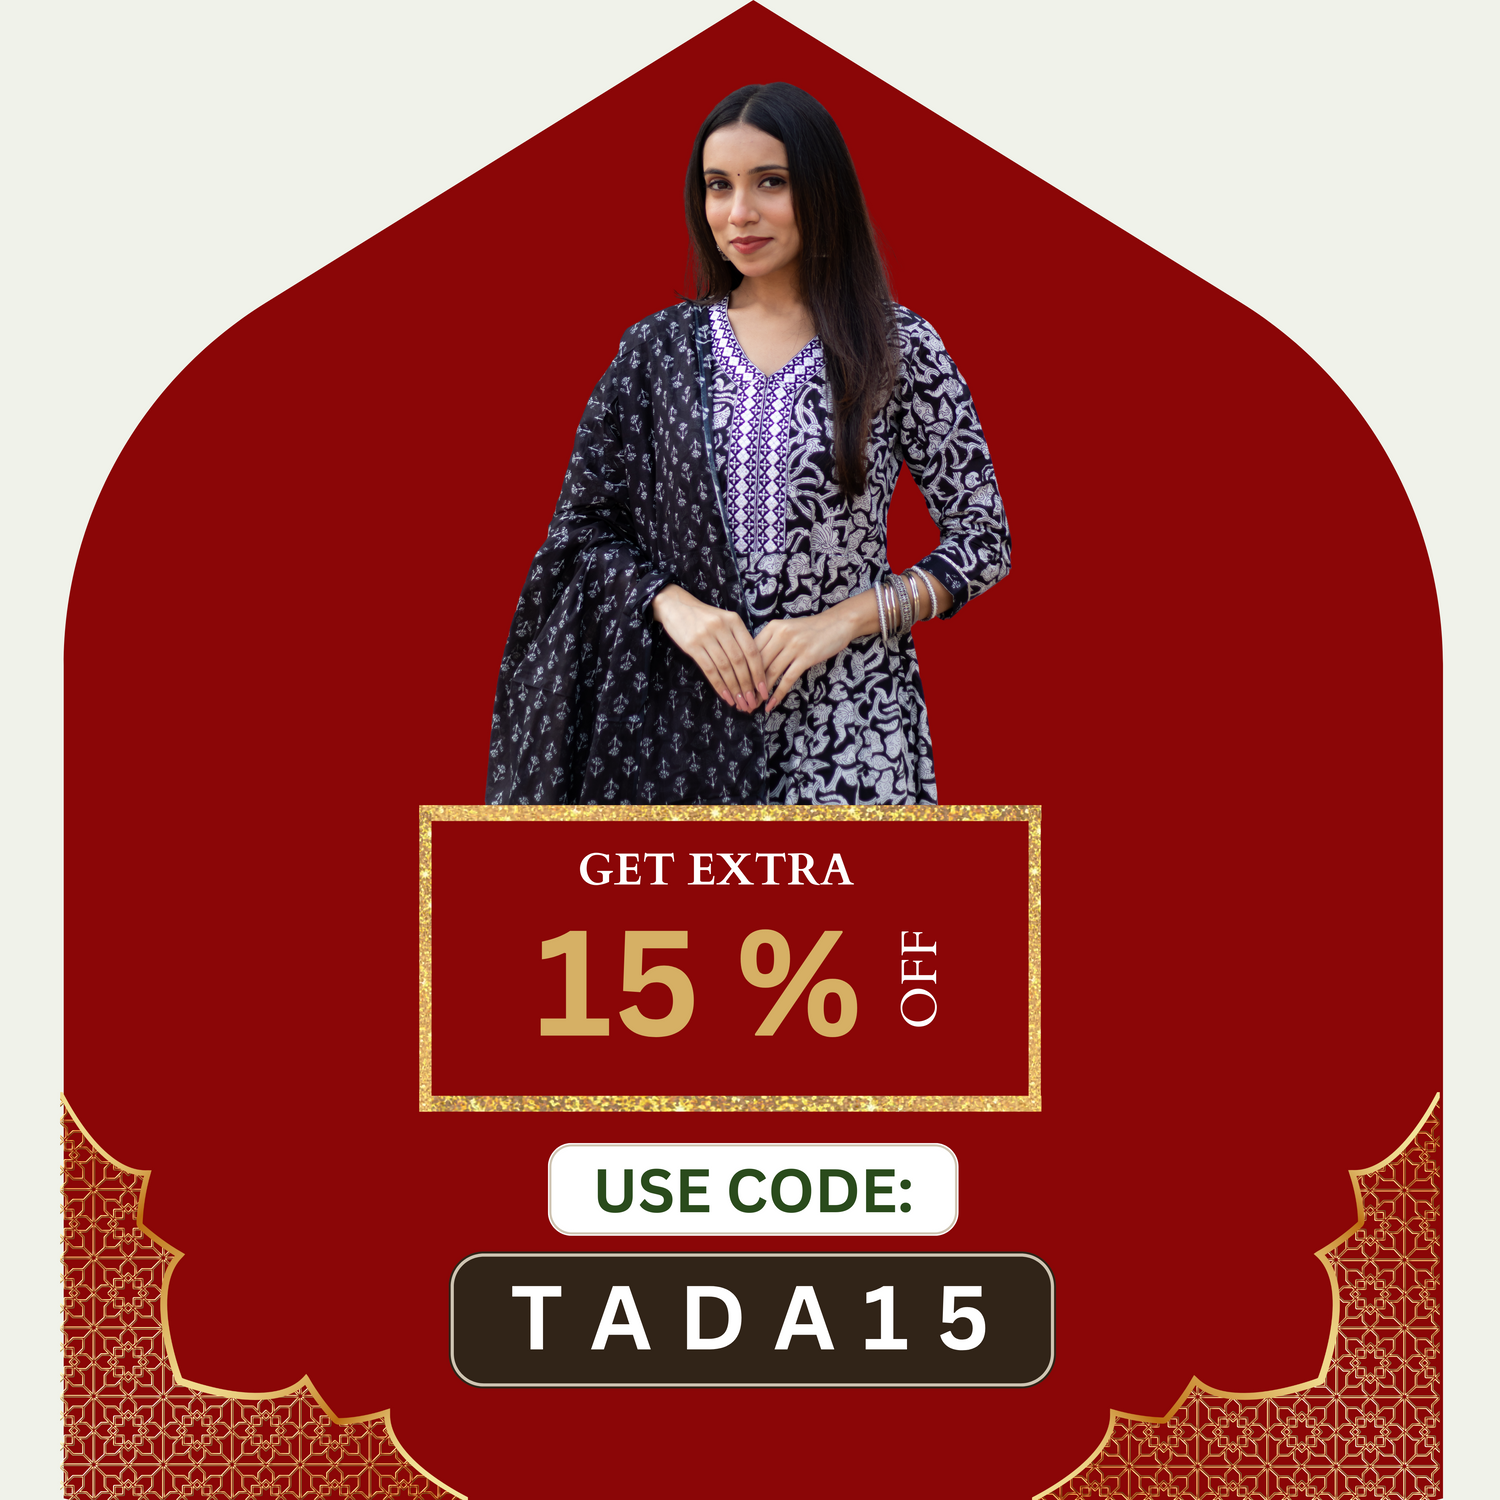 TADA ®️, Clothing brand